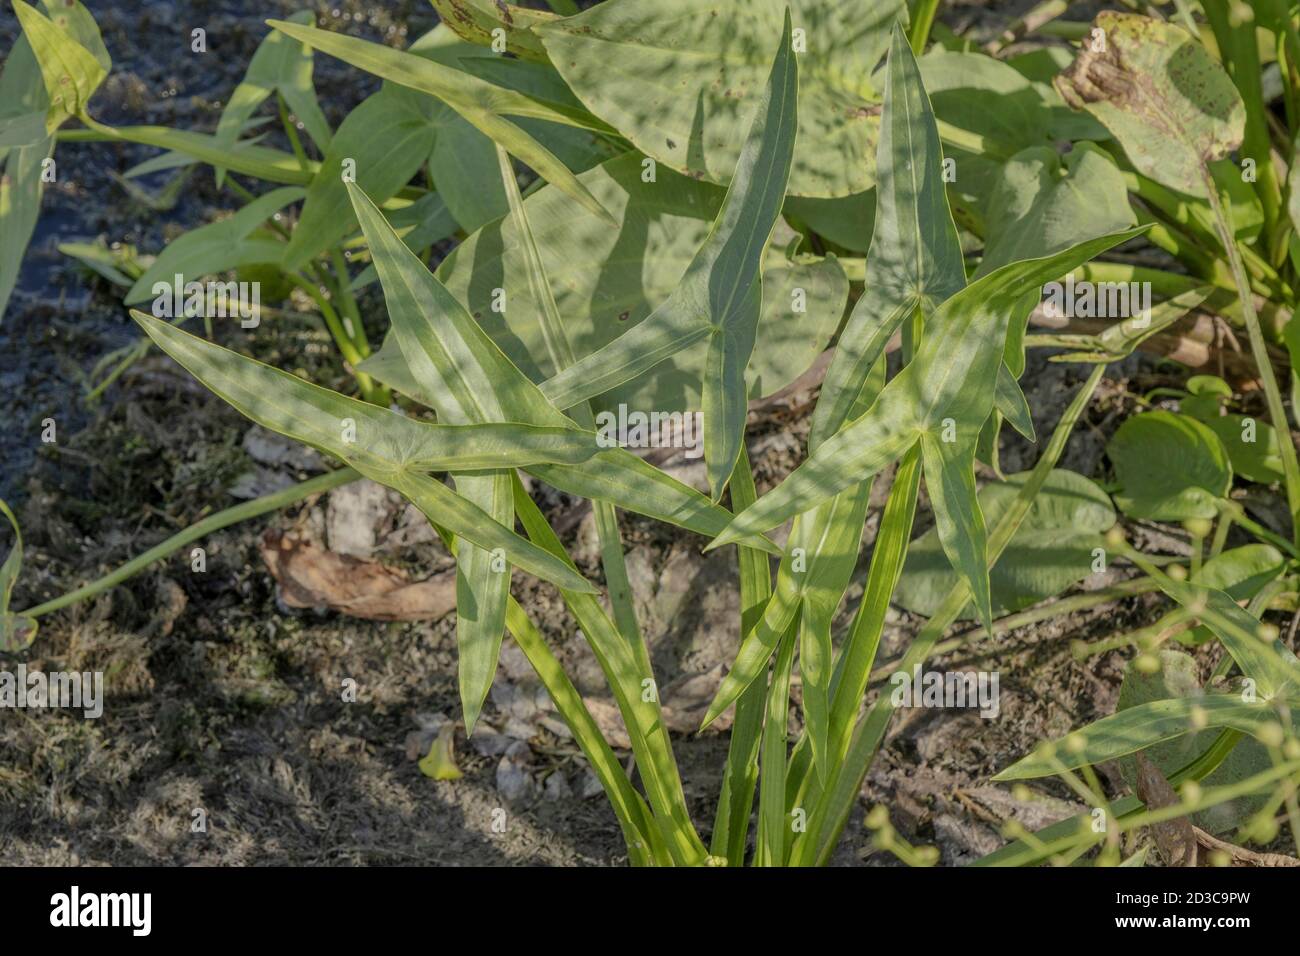 Pianta acquatica Arrowhead, arrowhead, patata d'anatra, katniss o Omodaka (Sagittaria) Foto Stock